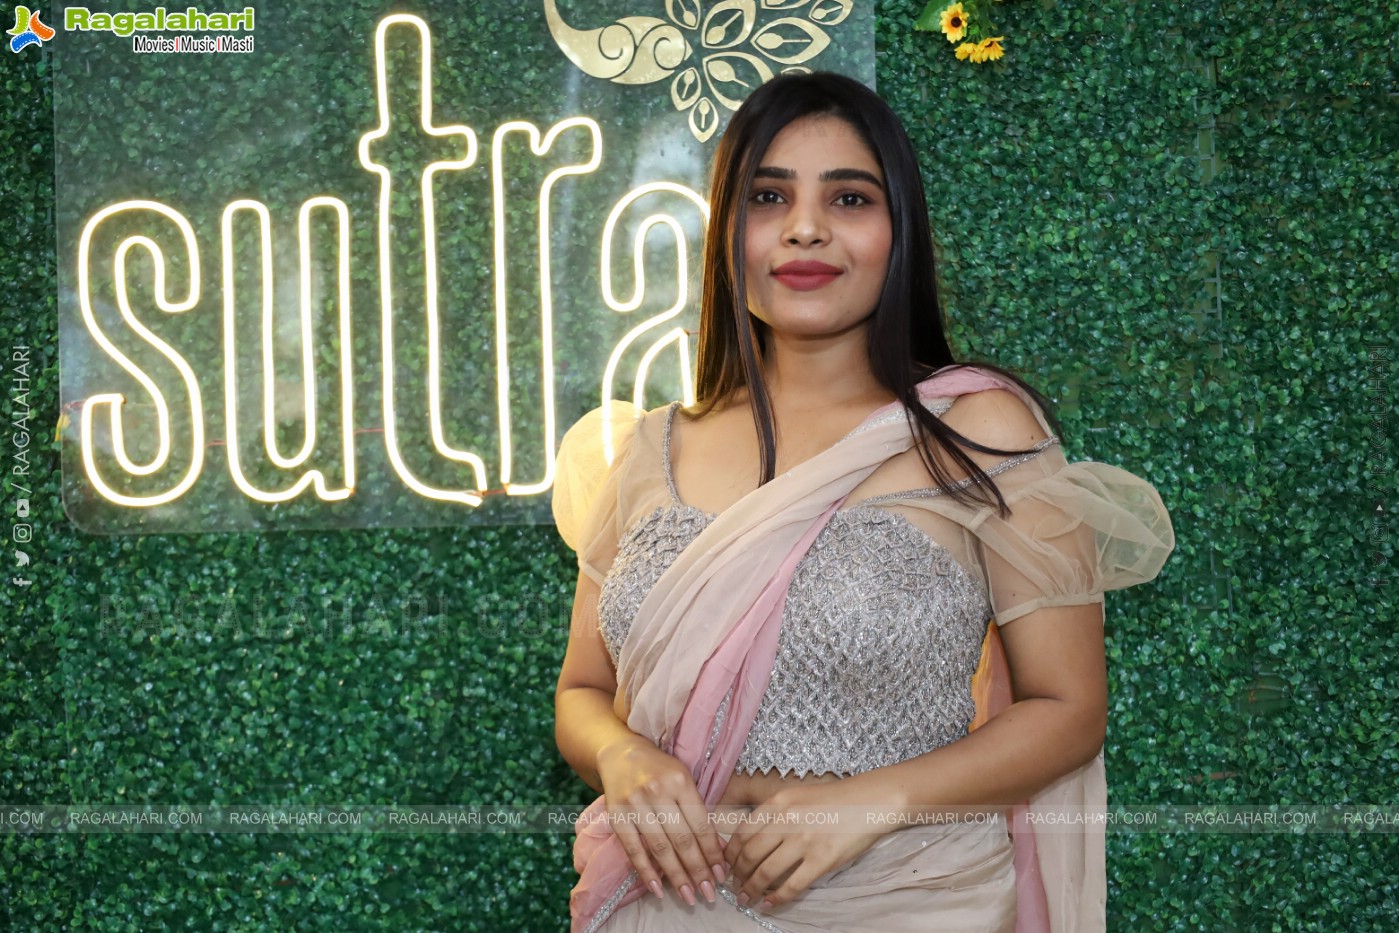 Sutraa Exhibition, Hyderabad Inaugurated by Actress Keerthi keshav bhat